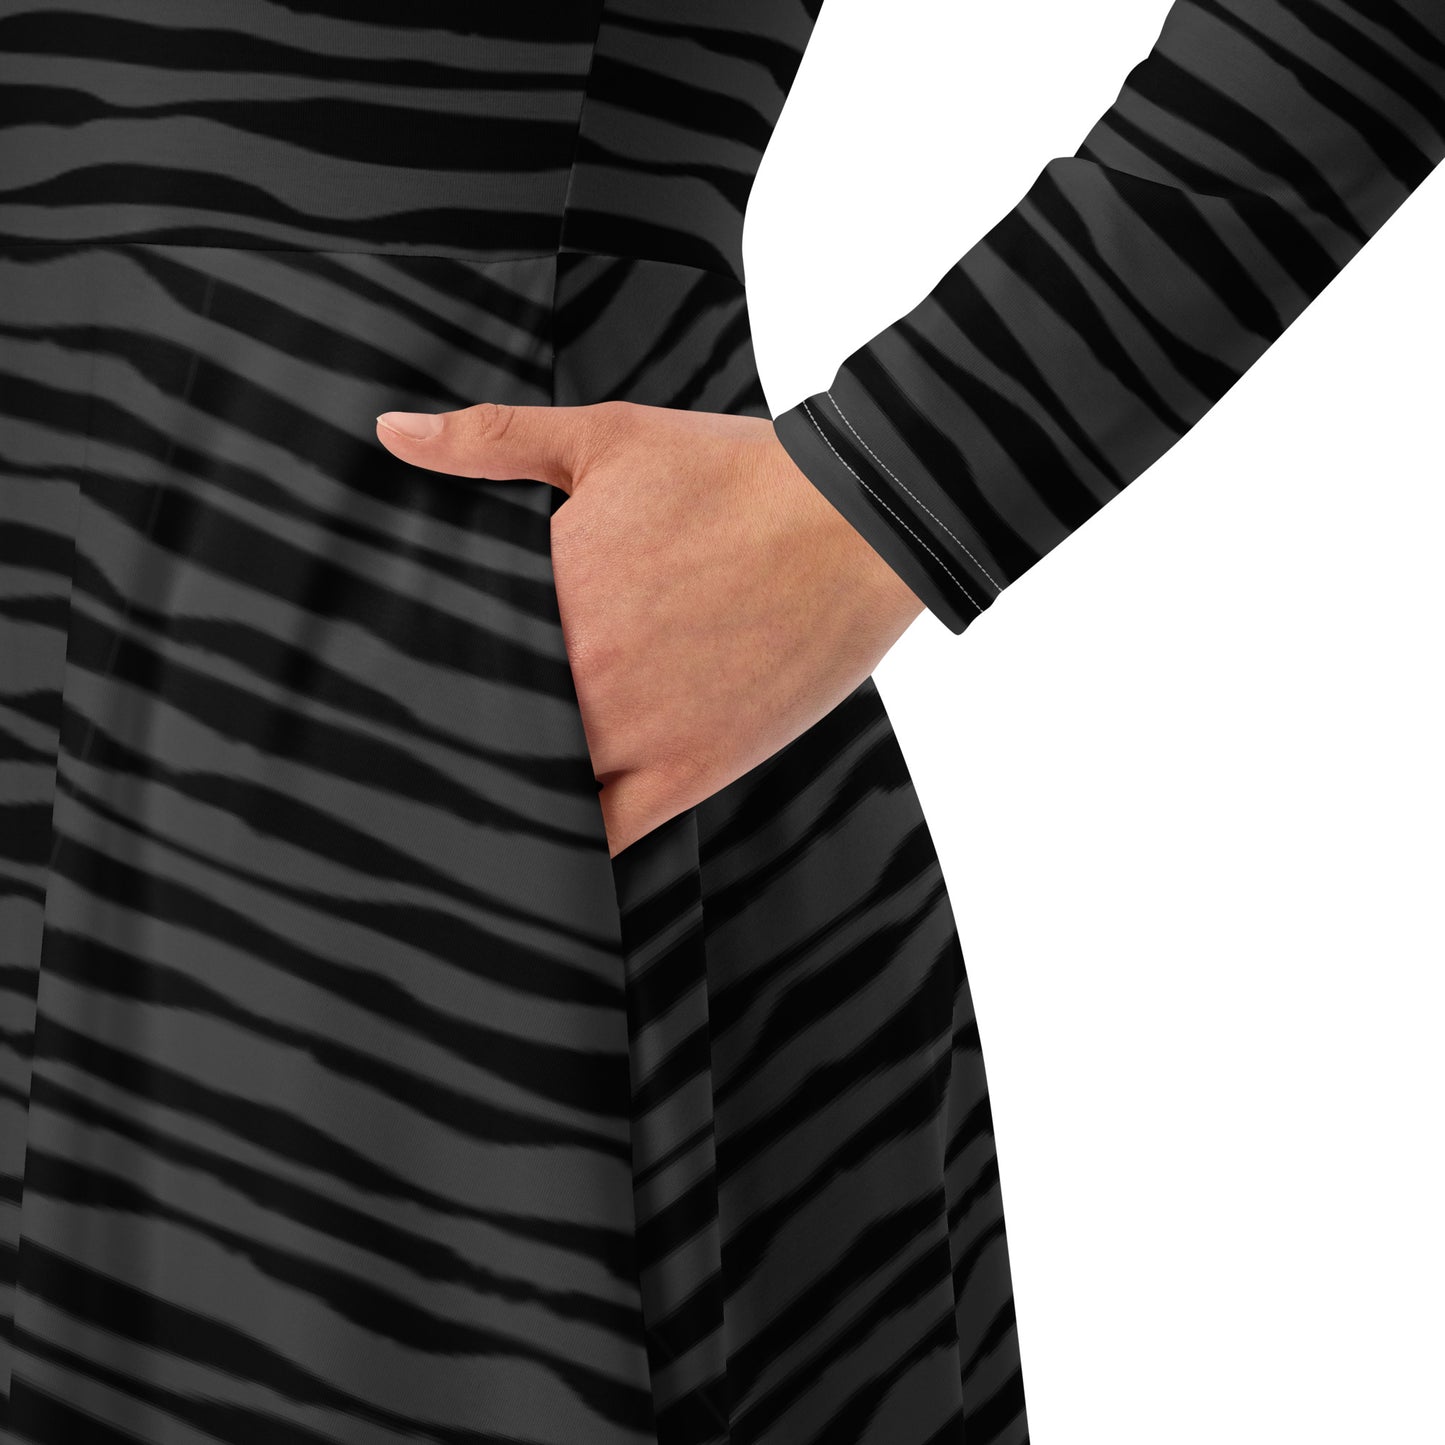 Black Pattern Long Sleeve Midi Dress